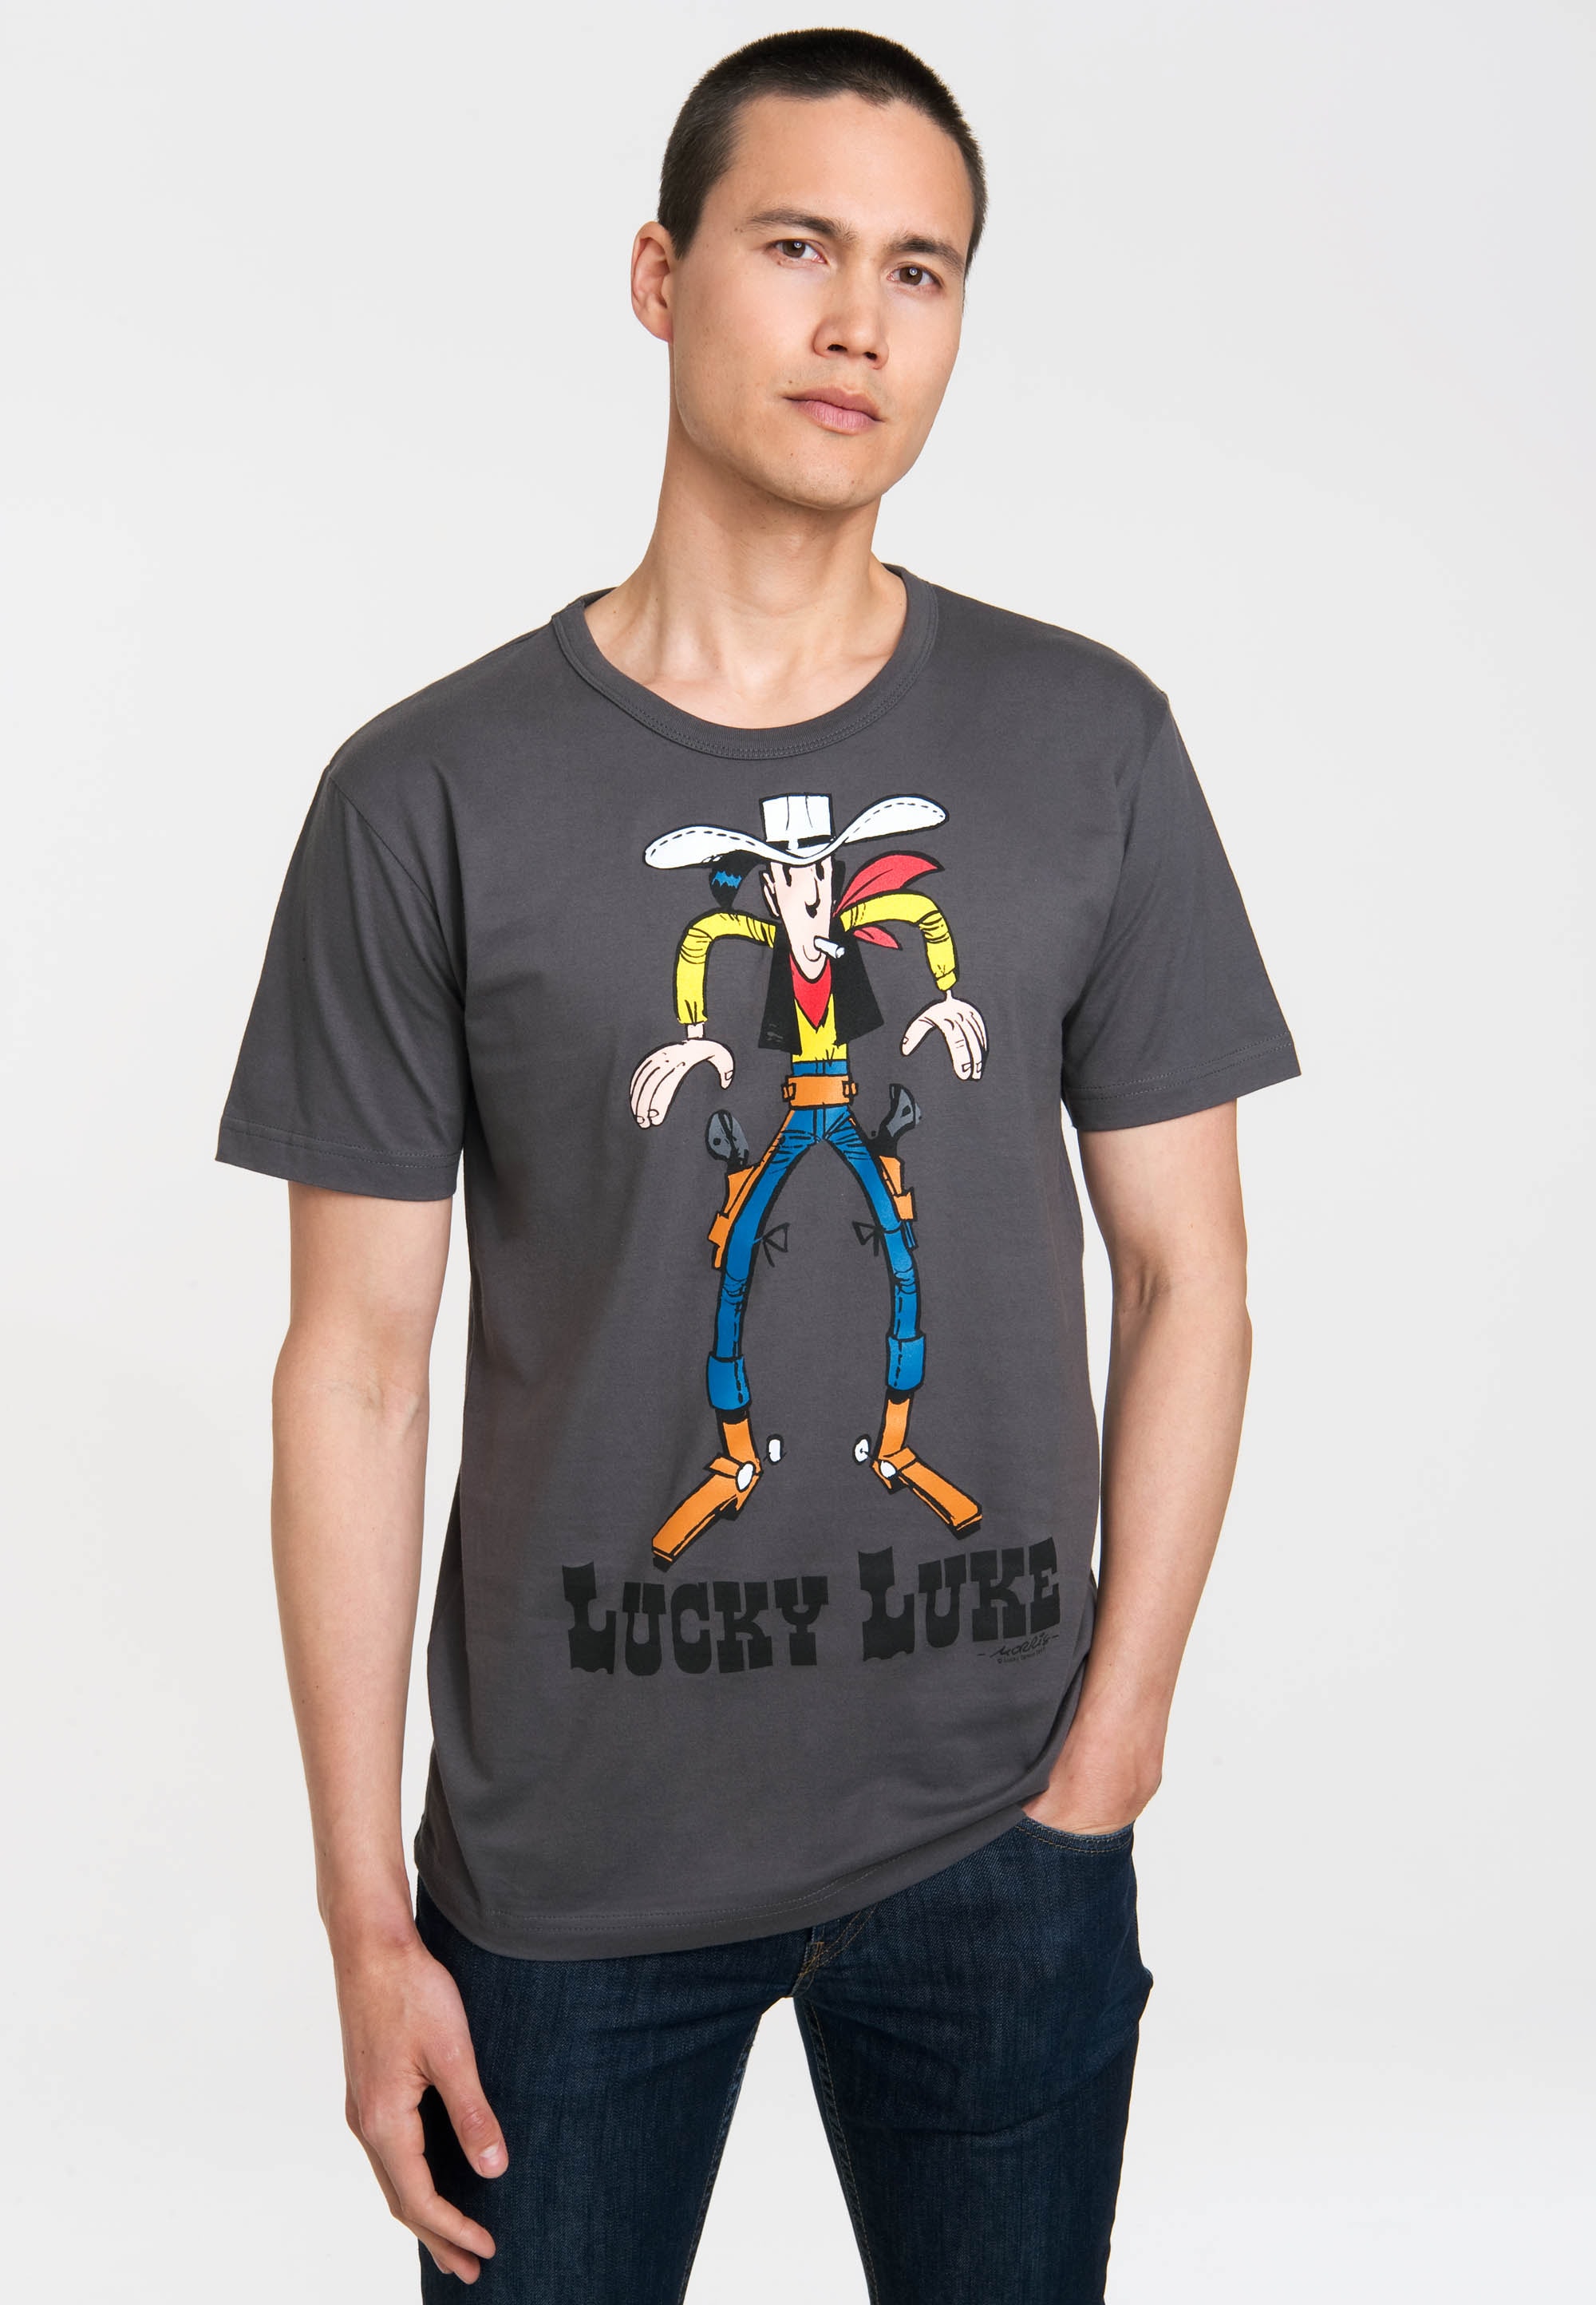 Logoshirt Comic - Cowboy - Lucky Luke - Showdown - T-Shirt Herren - grau - Lizenziertes Originaldesign, Größe L